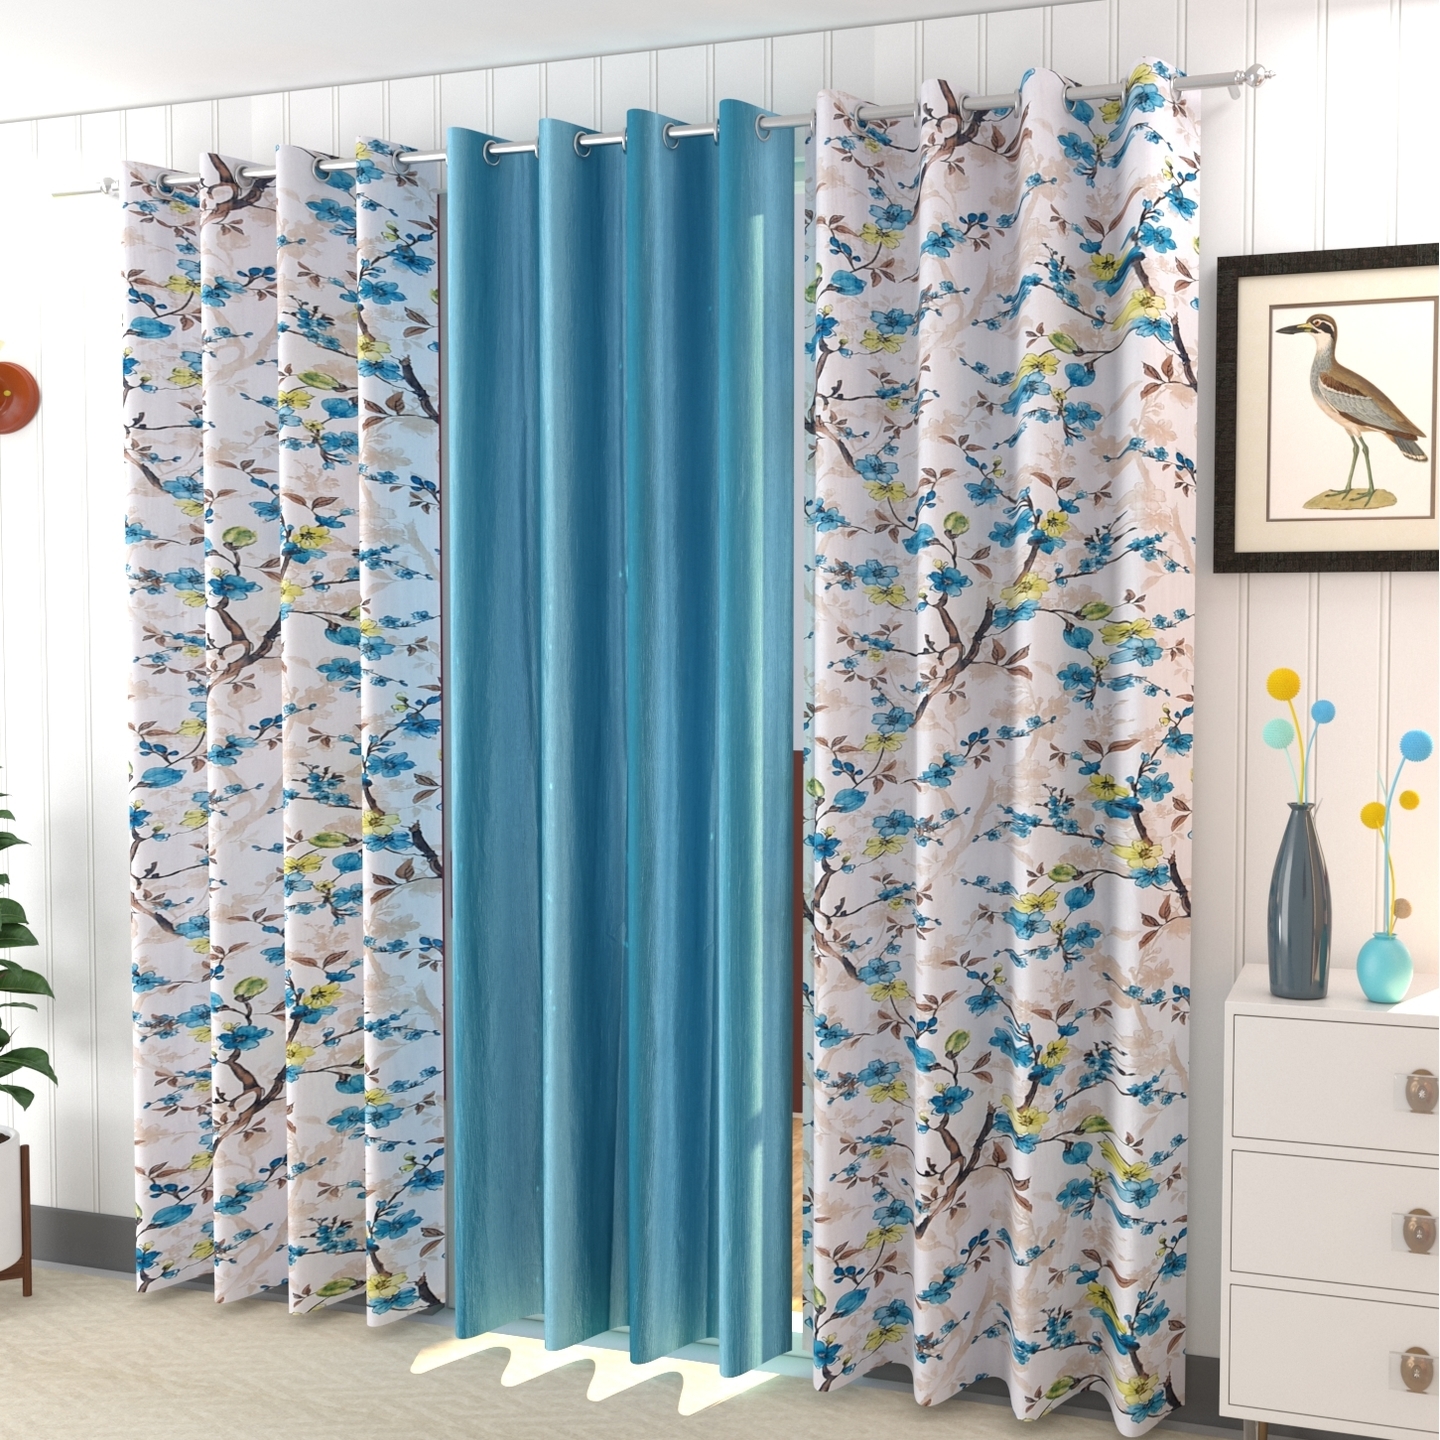 Handtex Home Polyester Digital Print Eyelet Curtain Set of 3 Pcs 4feet x 7feet Aqua